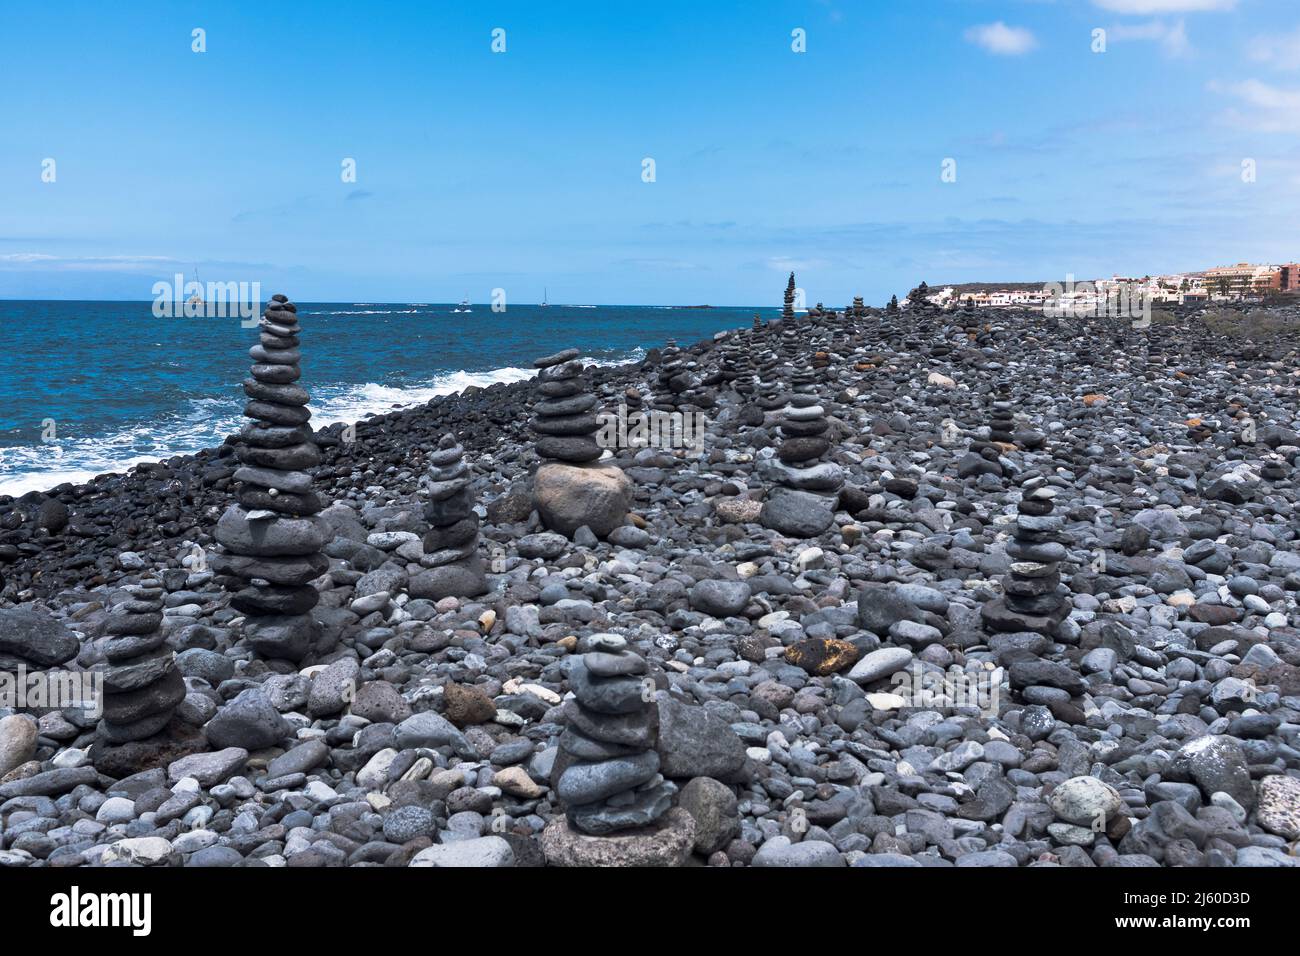 dh Beach art COSTA ADEJE TENERIFE Rock stone stack beaches stones rocky shore coast Stock Photo